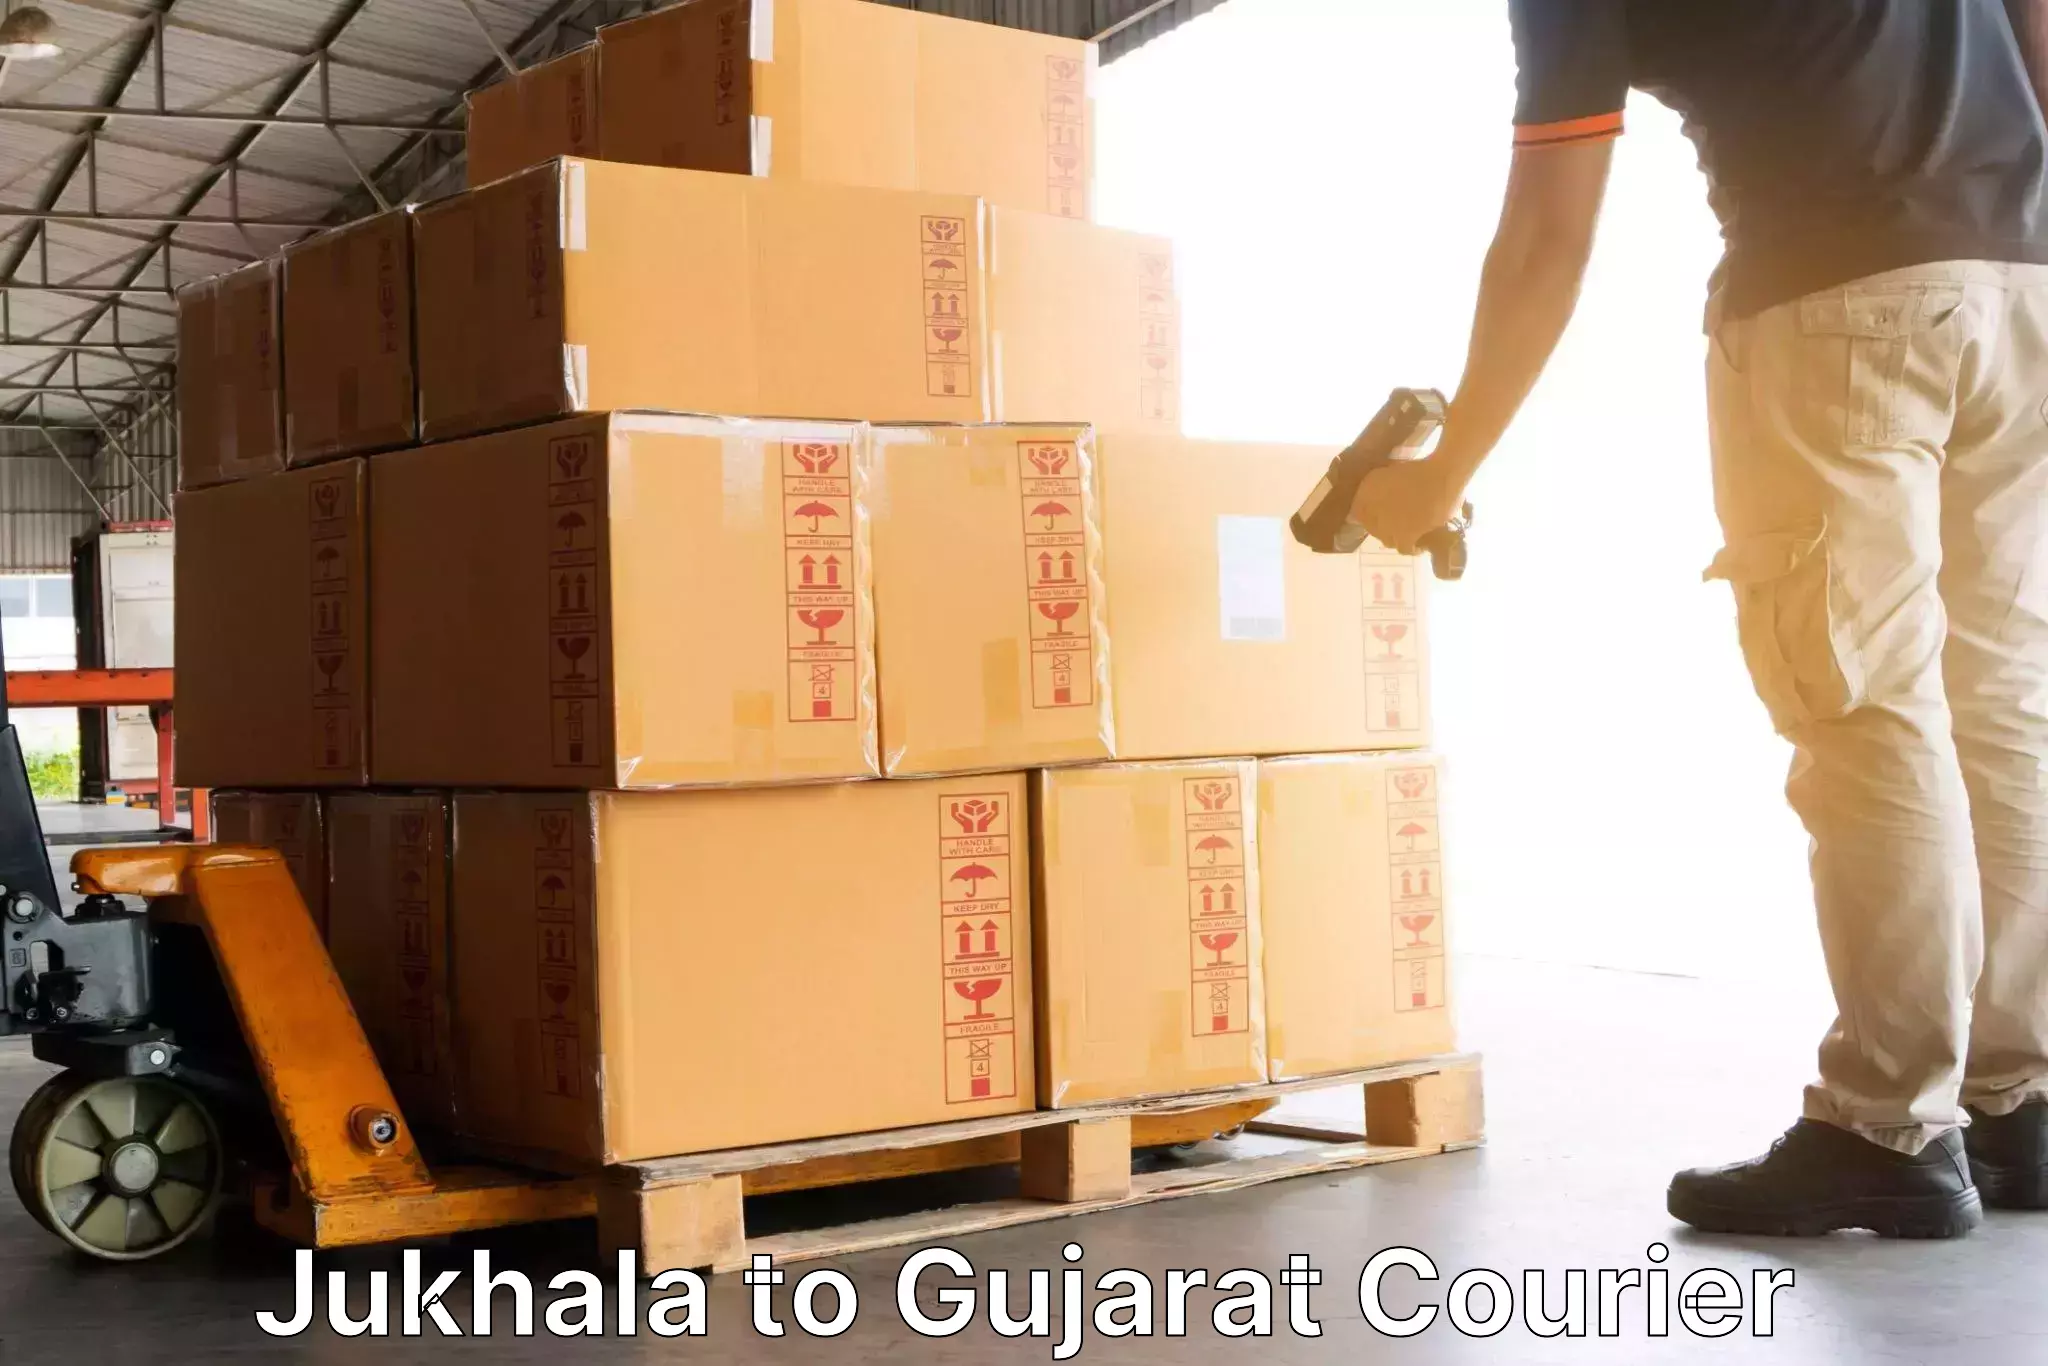 Fast delivery service in Jukhala to Dahej